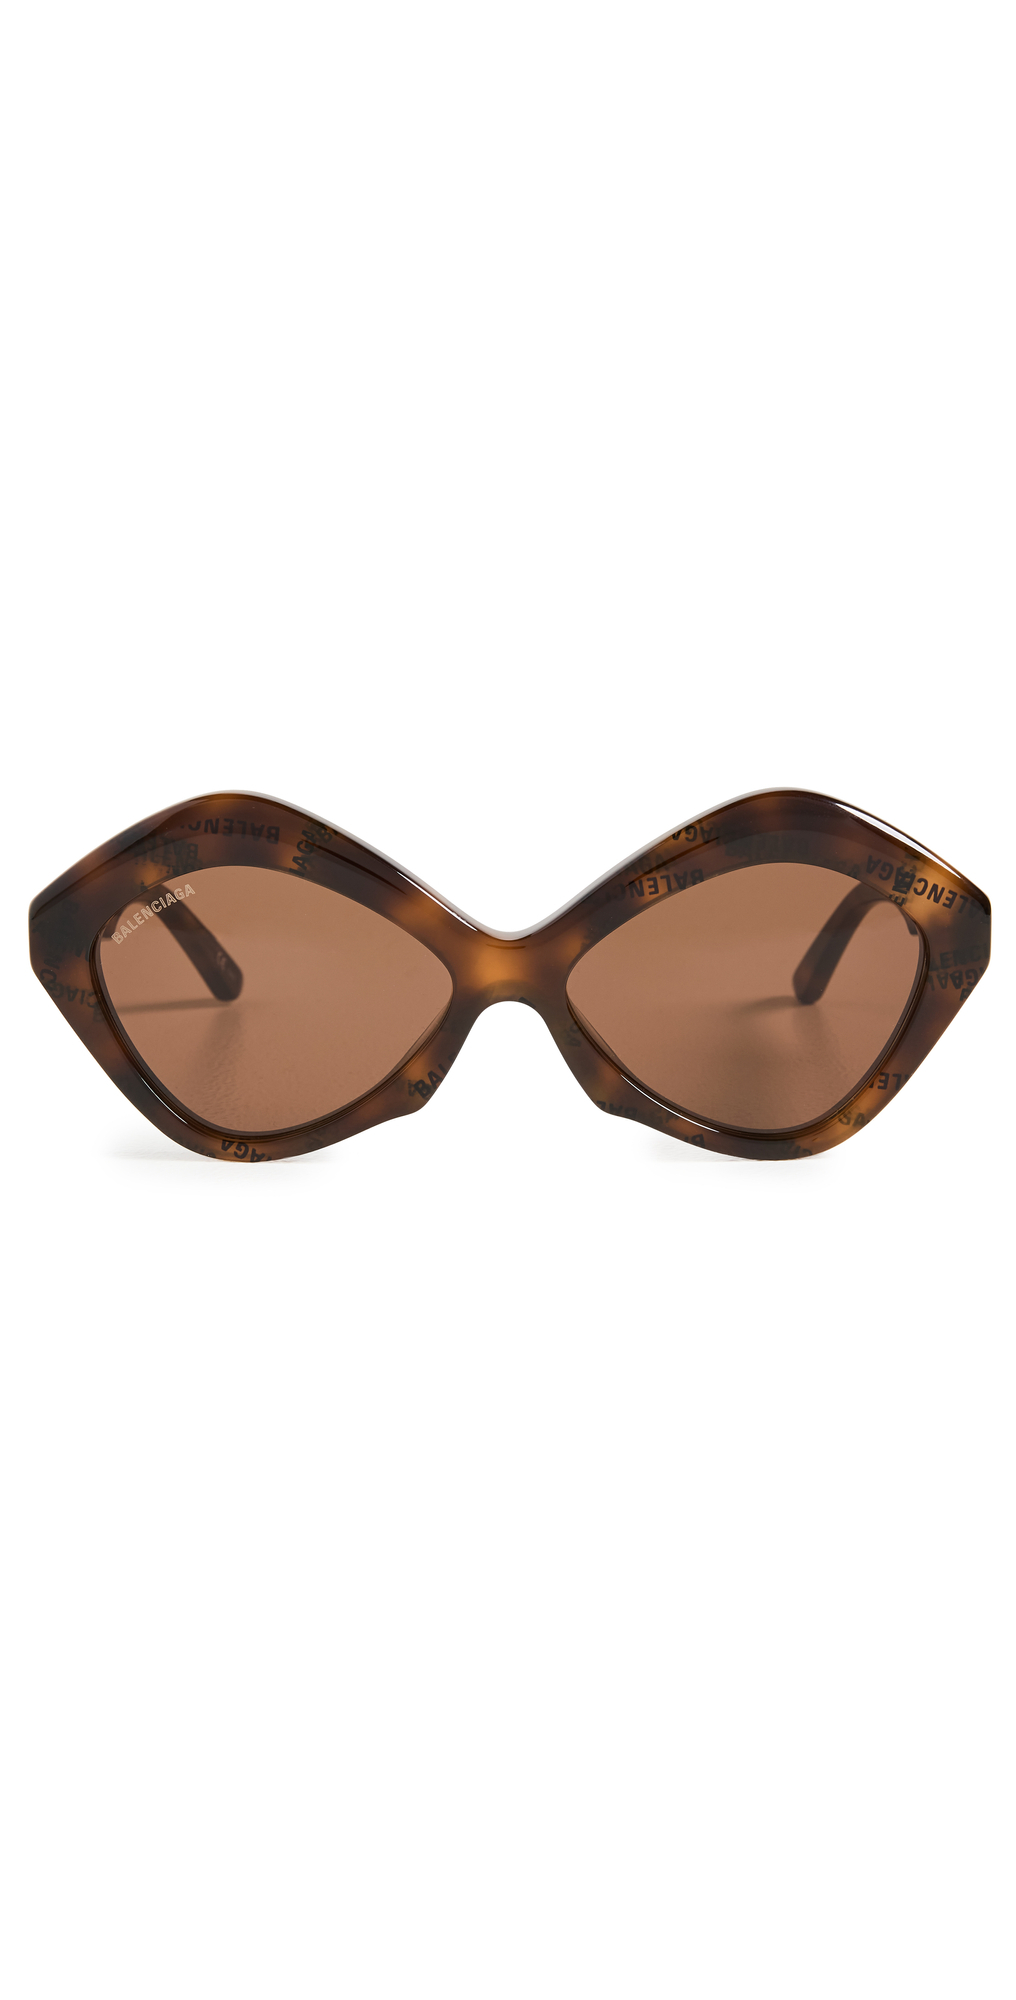 Balenciaga Power Sunglasses in brown